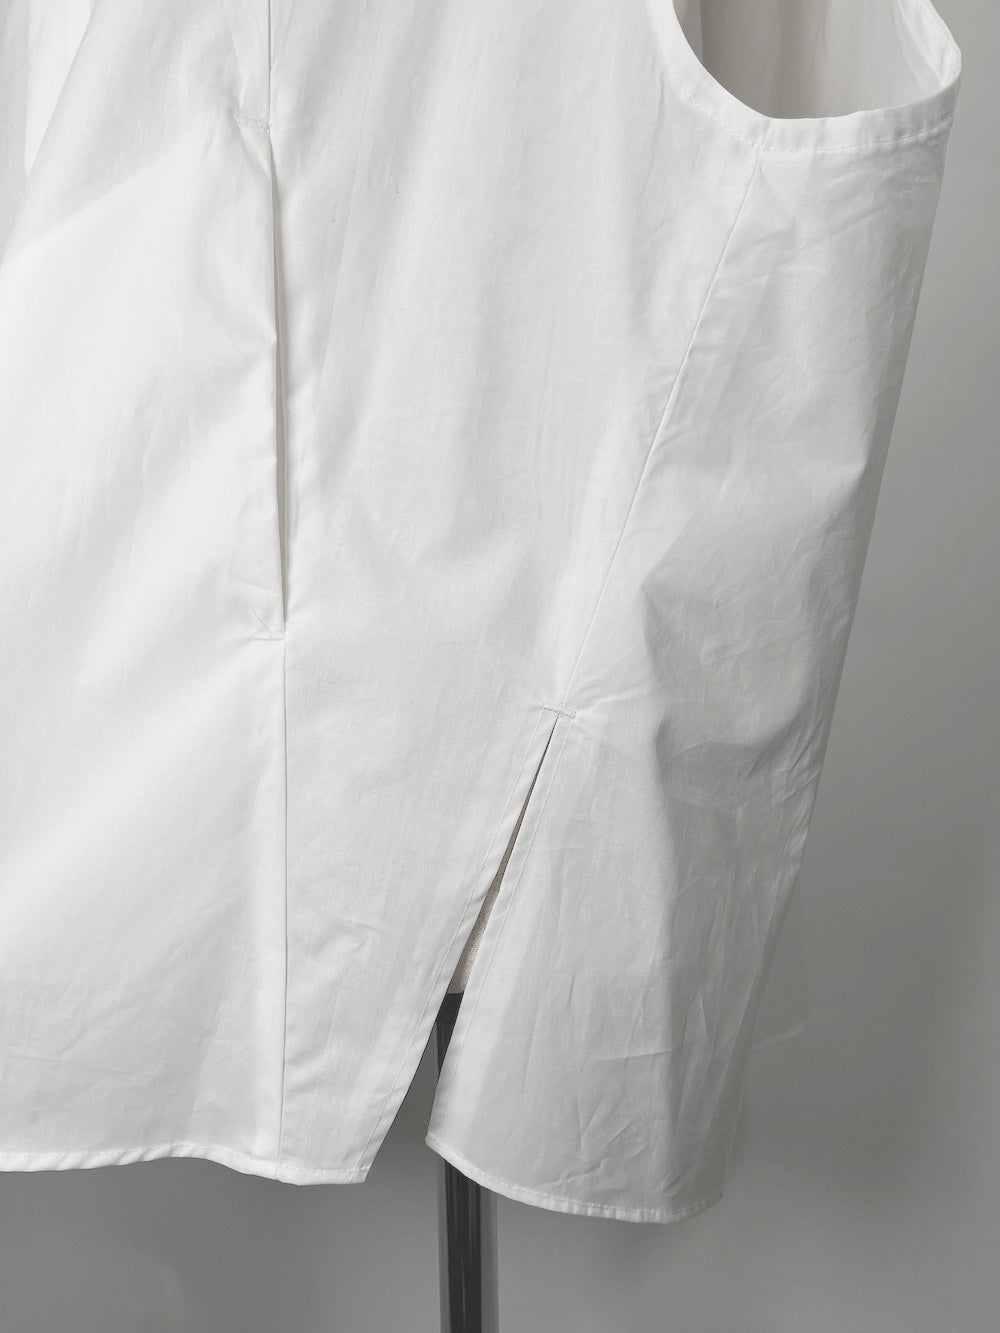 LB23SS-ESSH01-BC | 实用内衬衬衫 | 白色